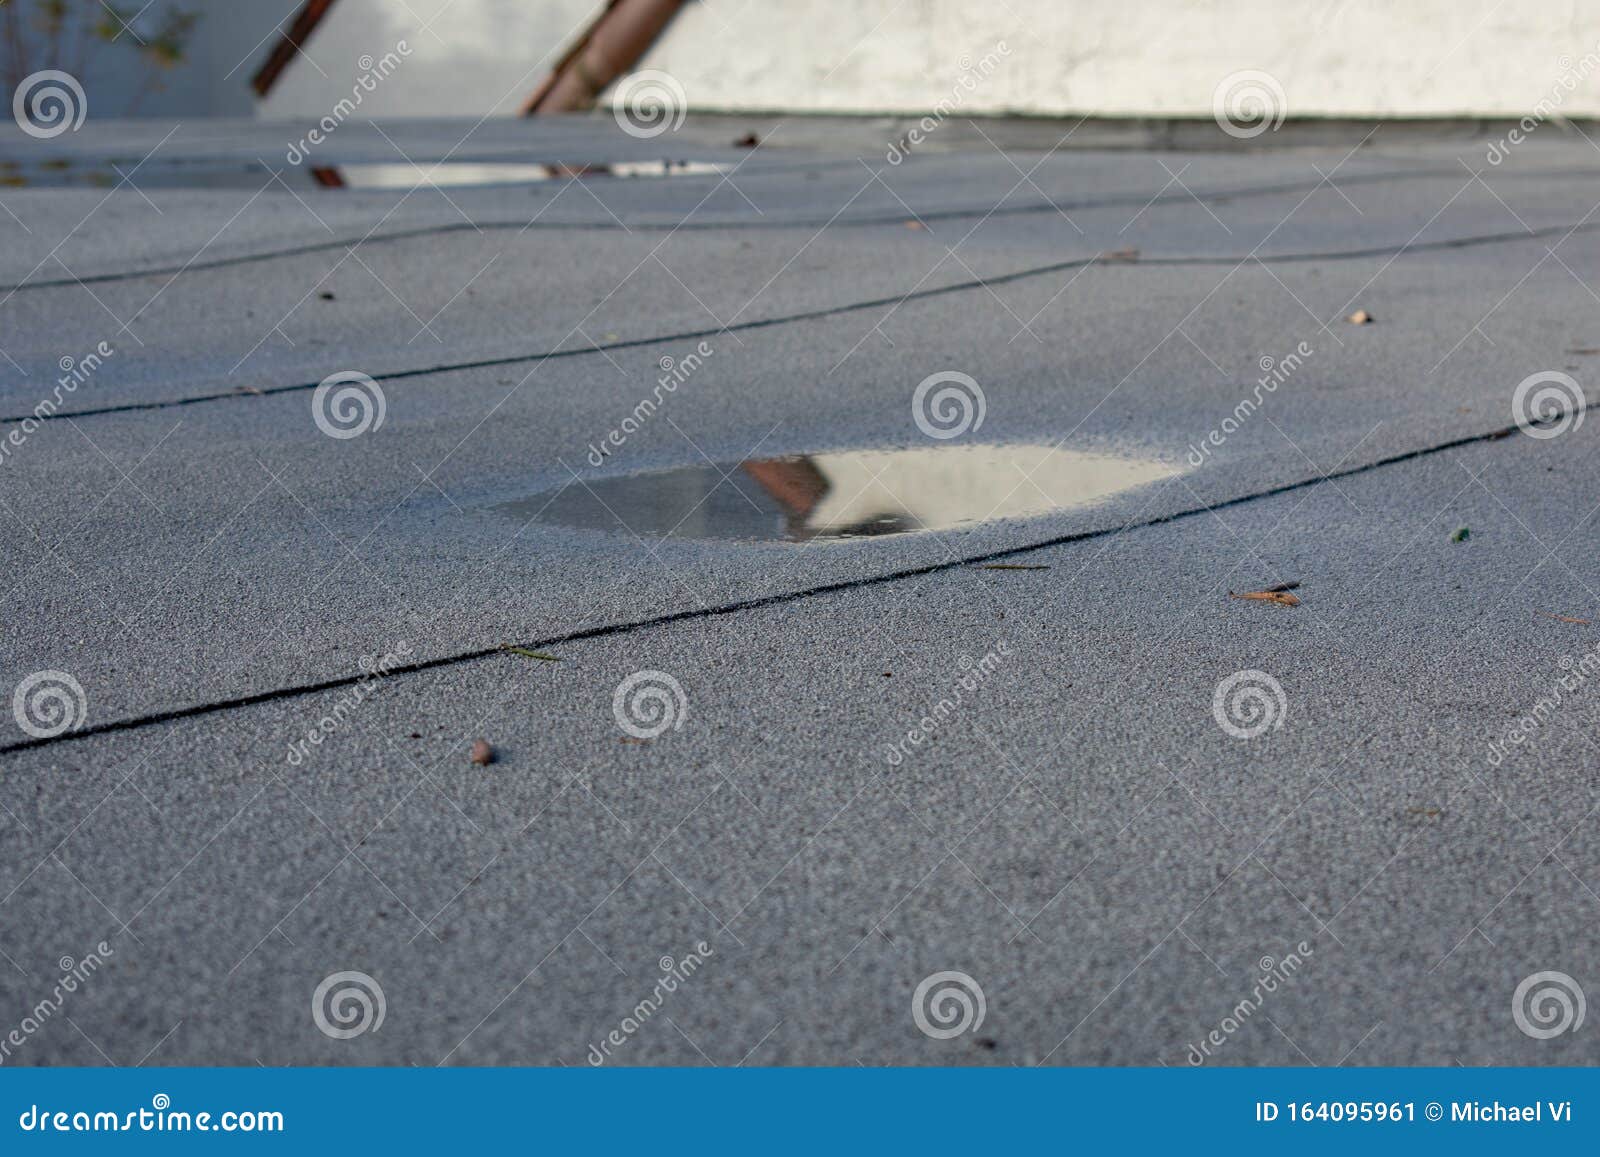 ponding rainwater on flat roof after rain